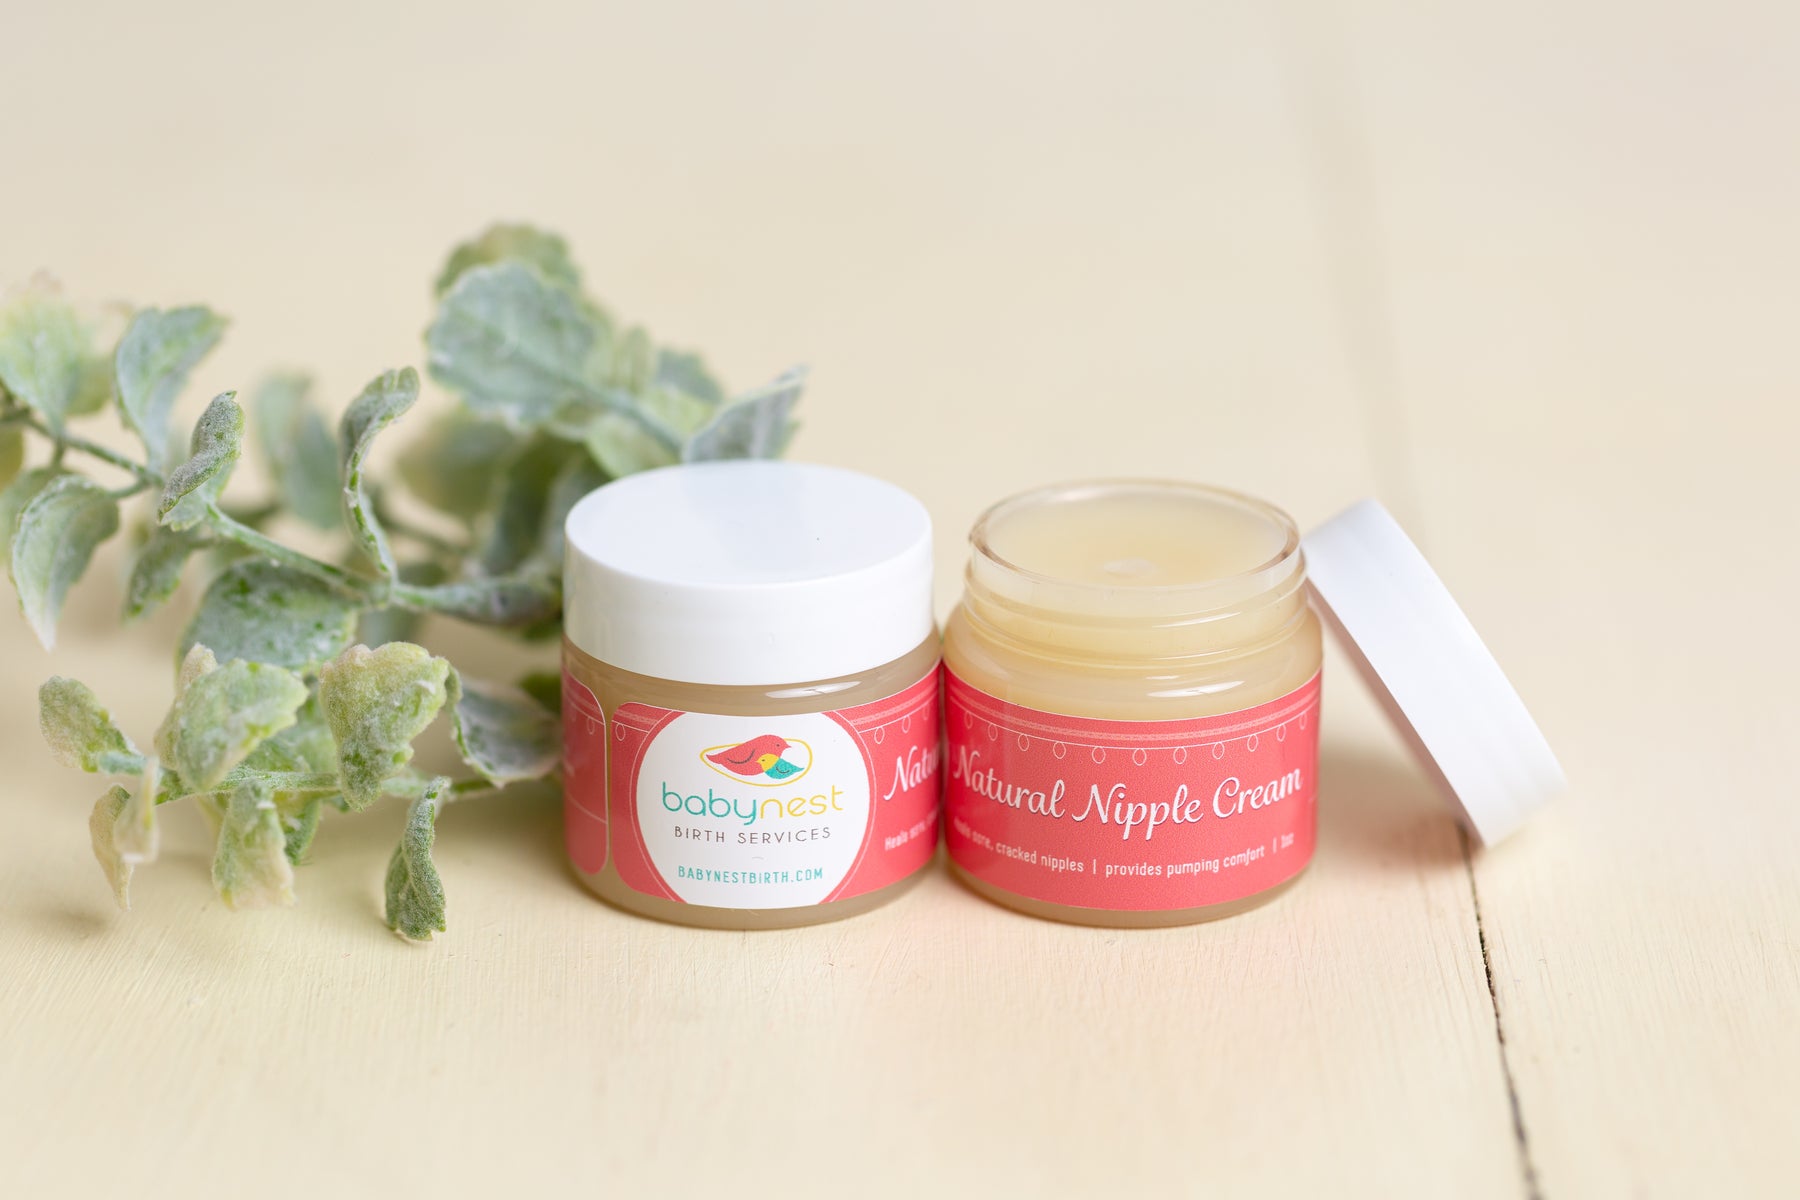 Organic Nipple Cream & Balm